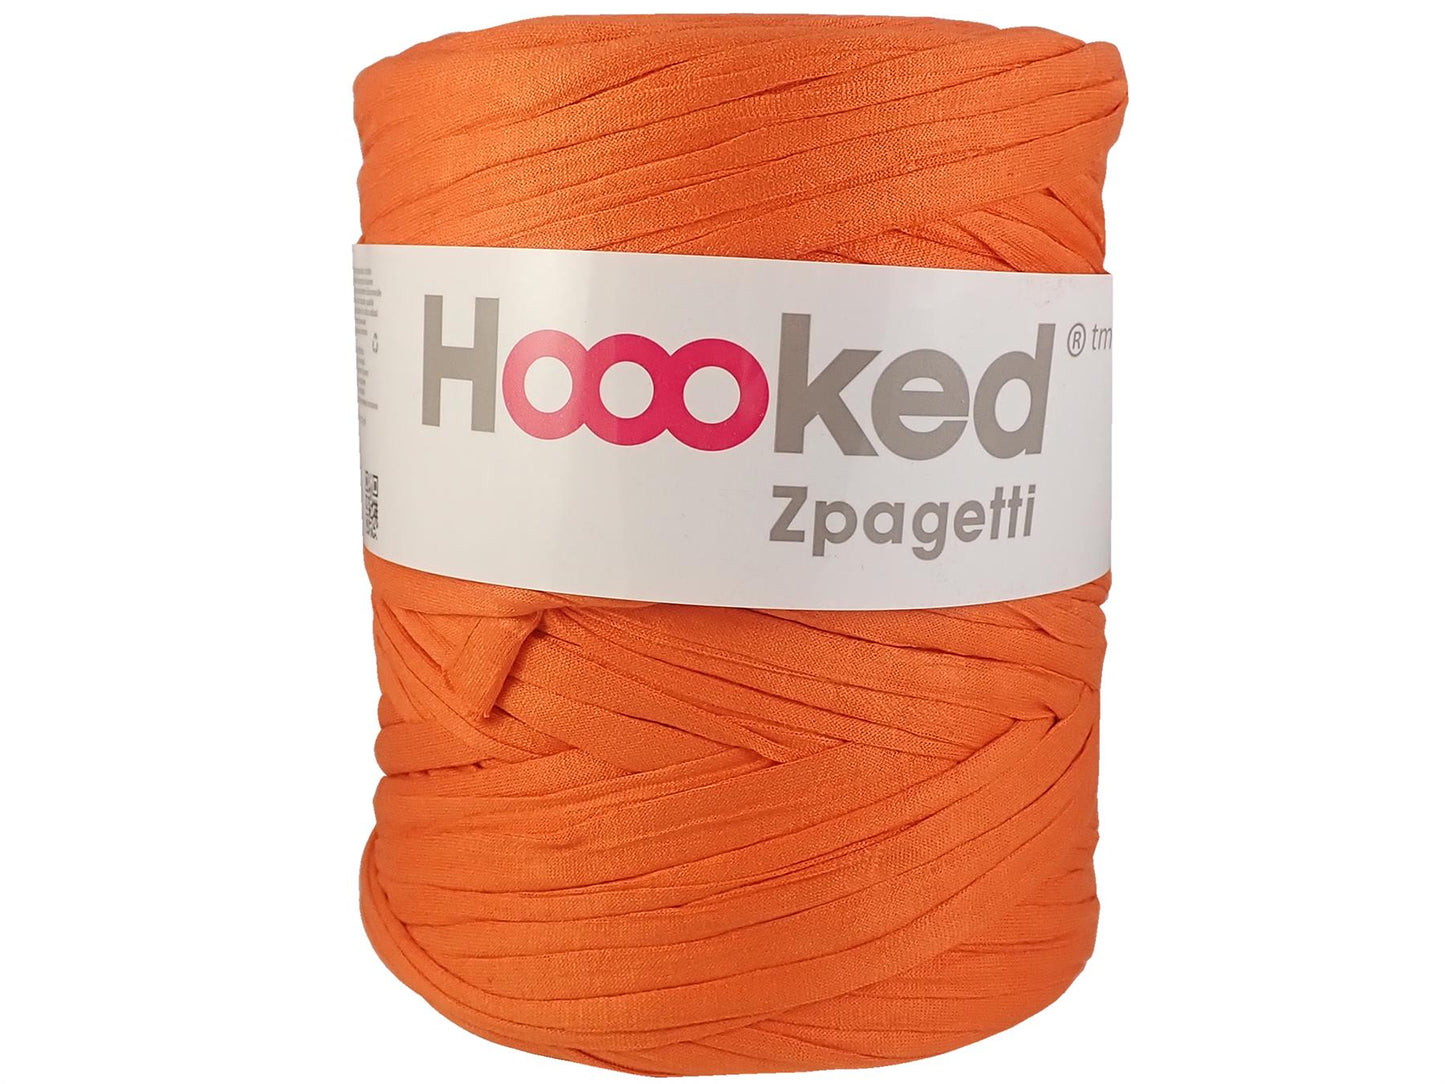 Hoooked Zpagetti Orange Cotton T-Shirt Yarn - 120M 700g